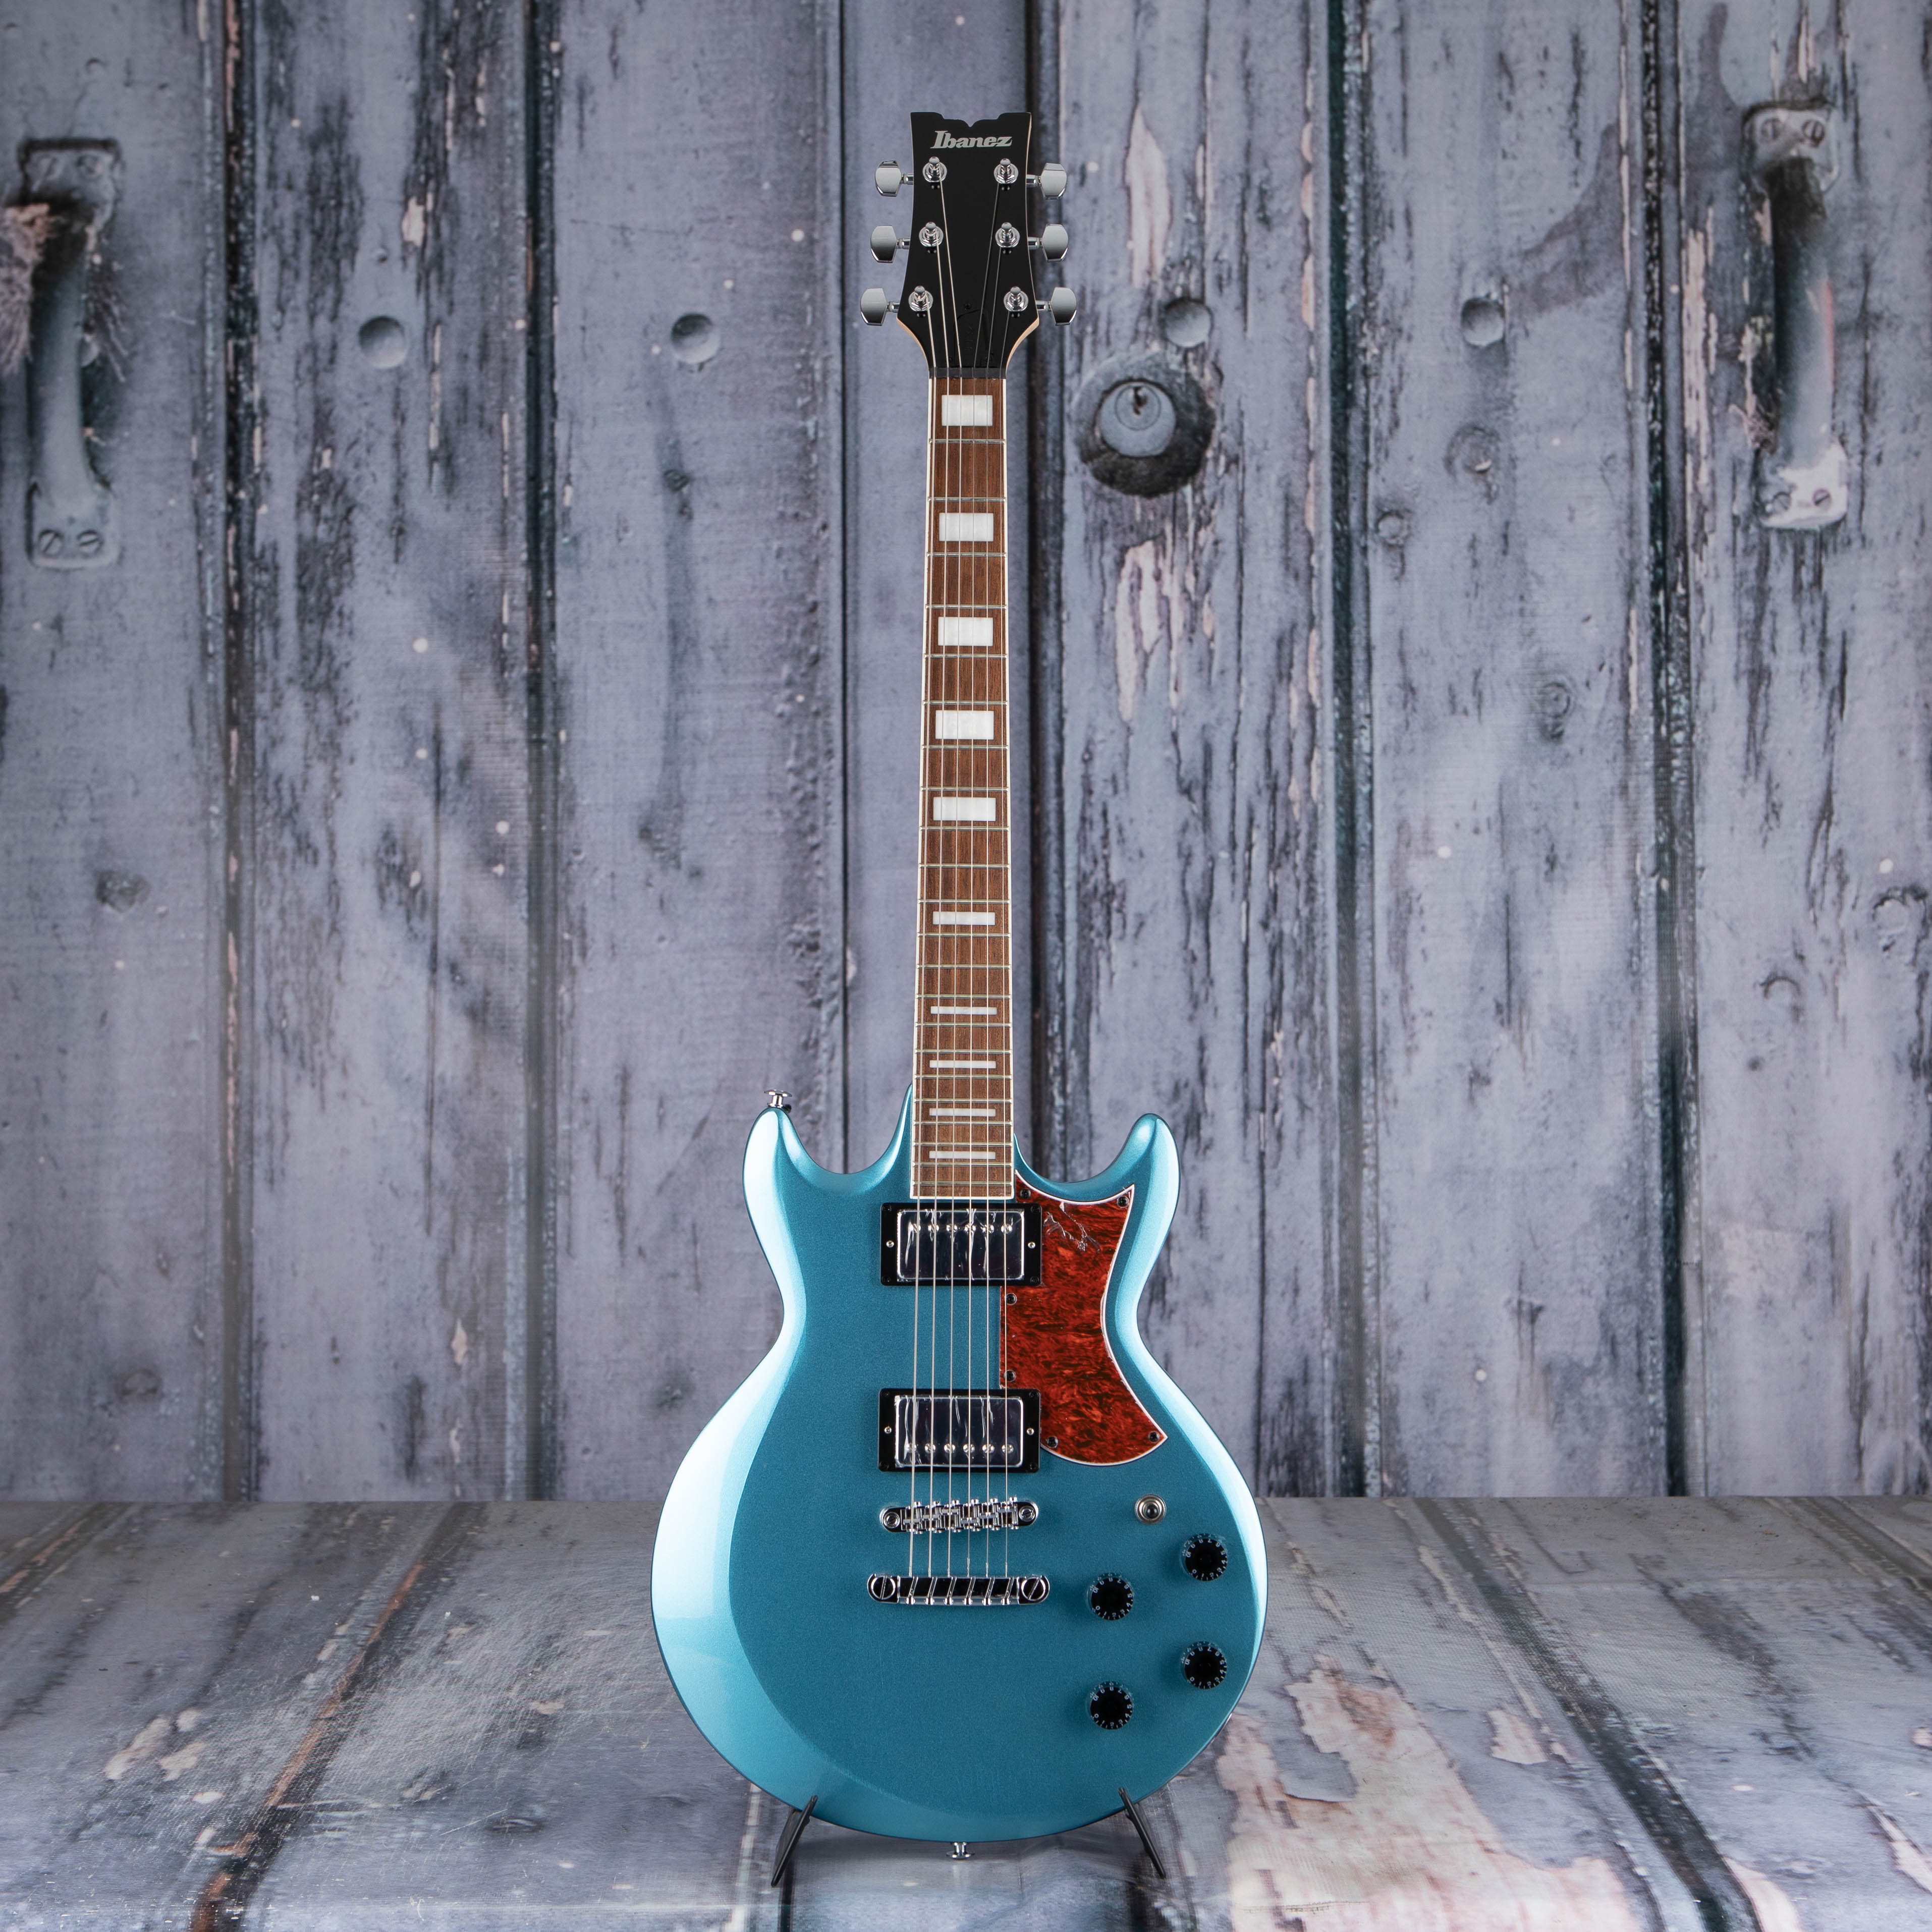 Ibanez AX120 Electric Guitar, Metallic Light Blue, front